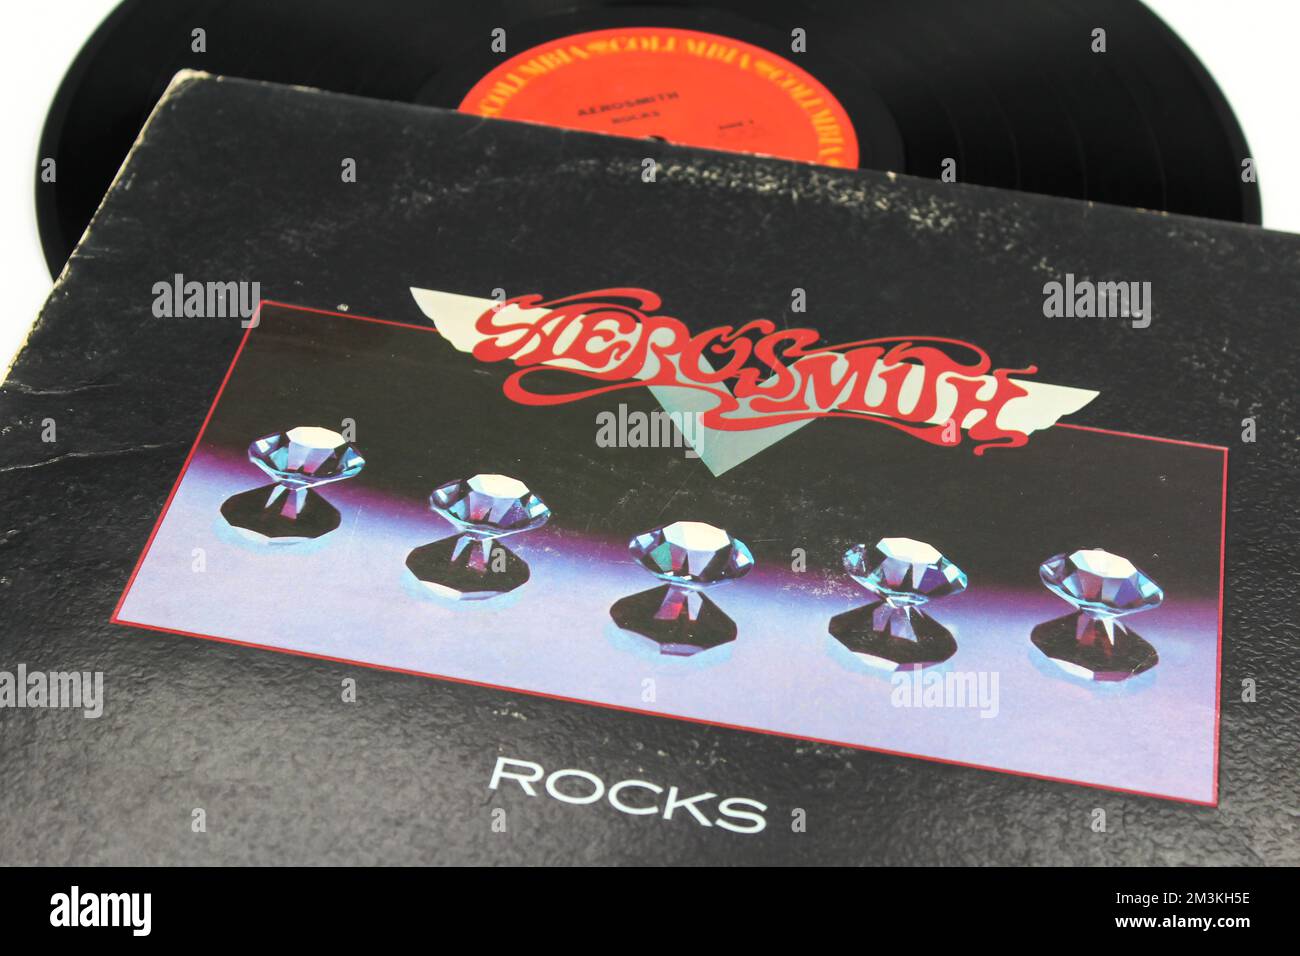 Classic rock band, Aerosmith, music album on vinyl record LP disc. Titled Rocks  Album Cover Stock Photo